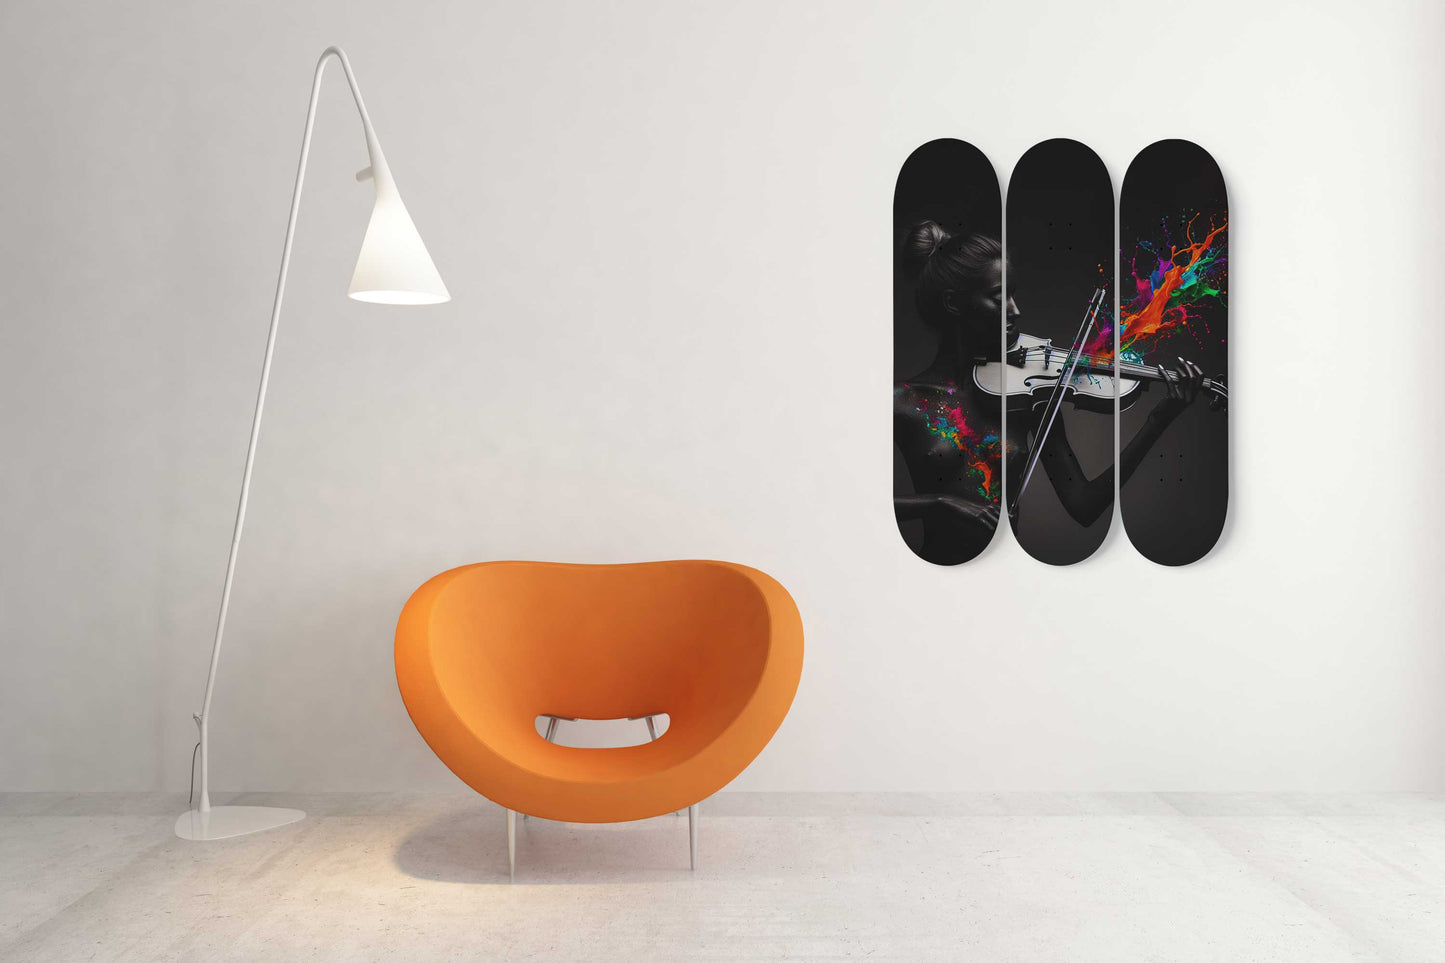 Violin 3-Deck Skateboard Wall Art